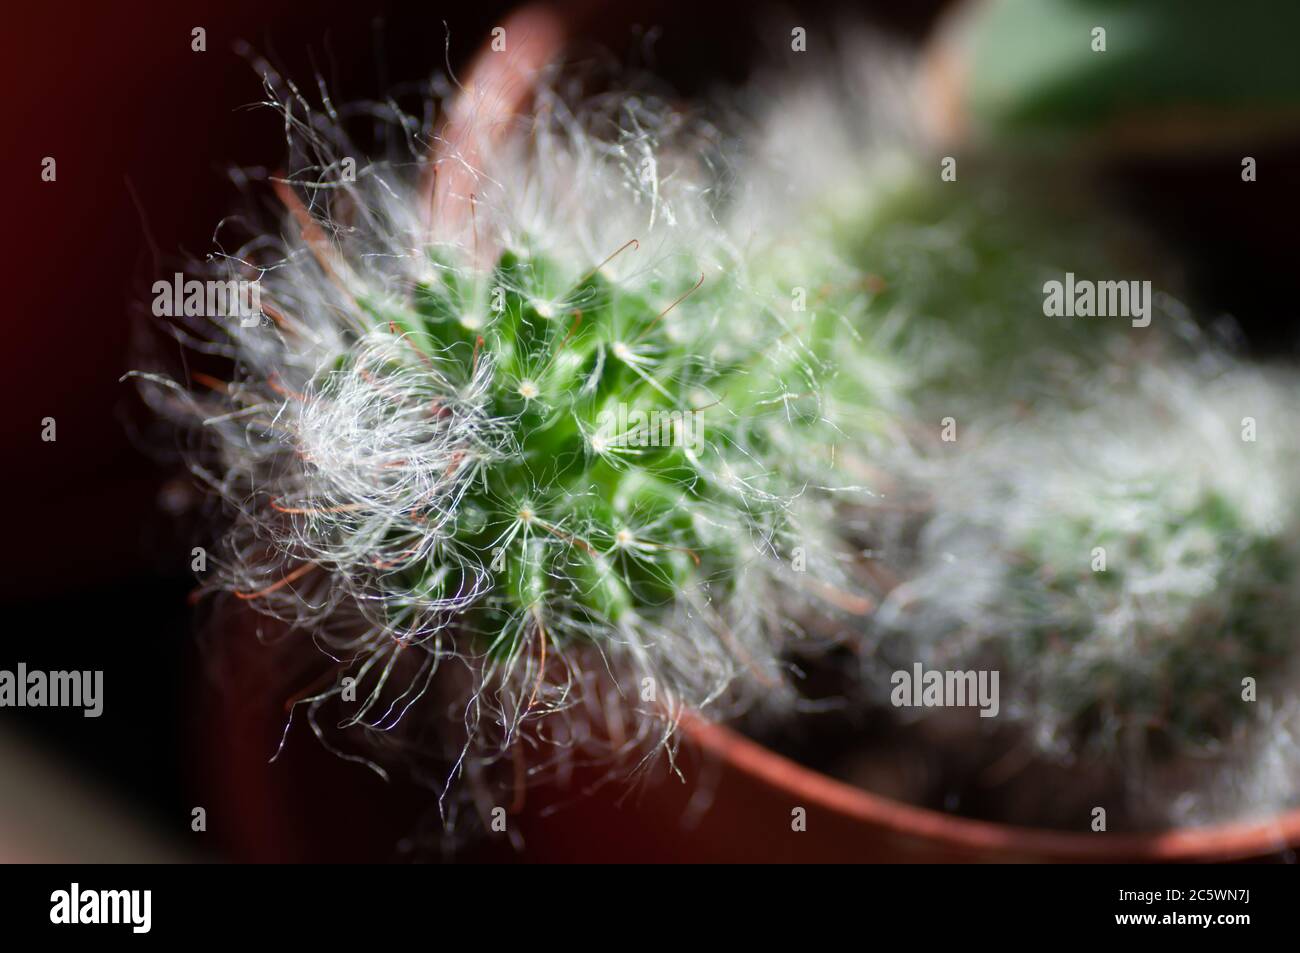 Hairy cactus in botanical greenhouse garden plant. Botanical macrophotography for illustration of cactus. Stock Photo